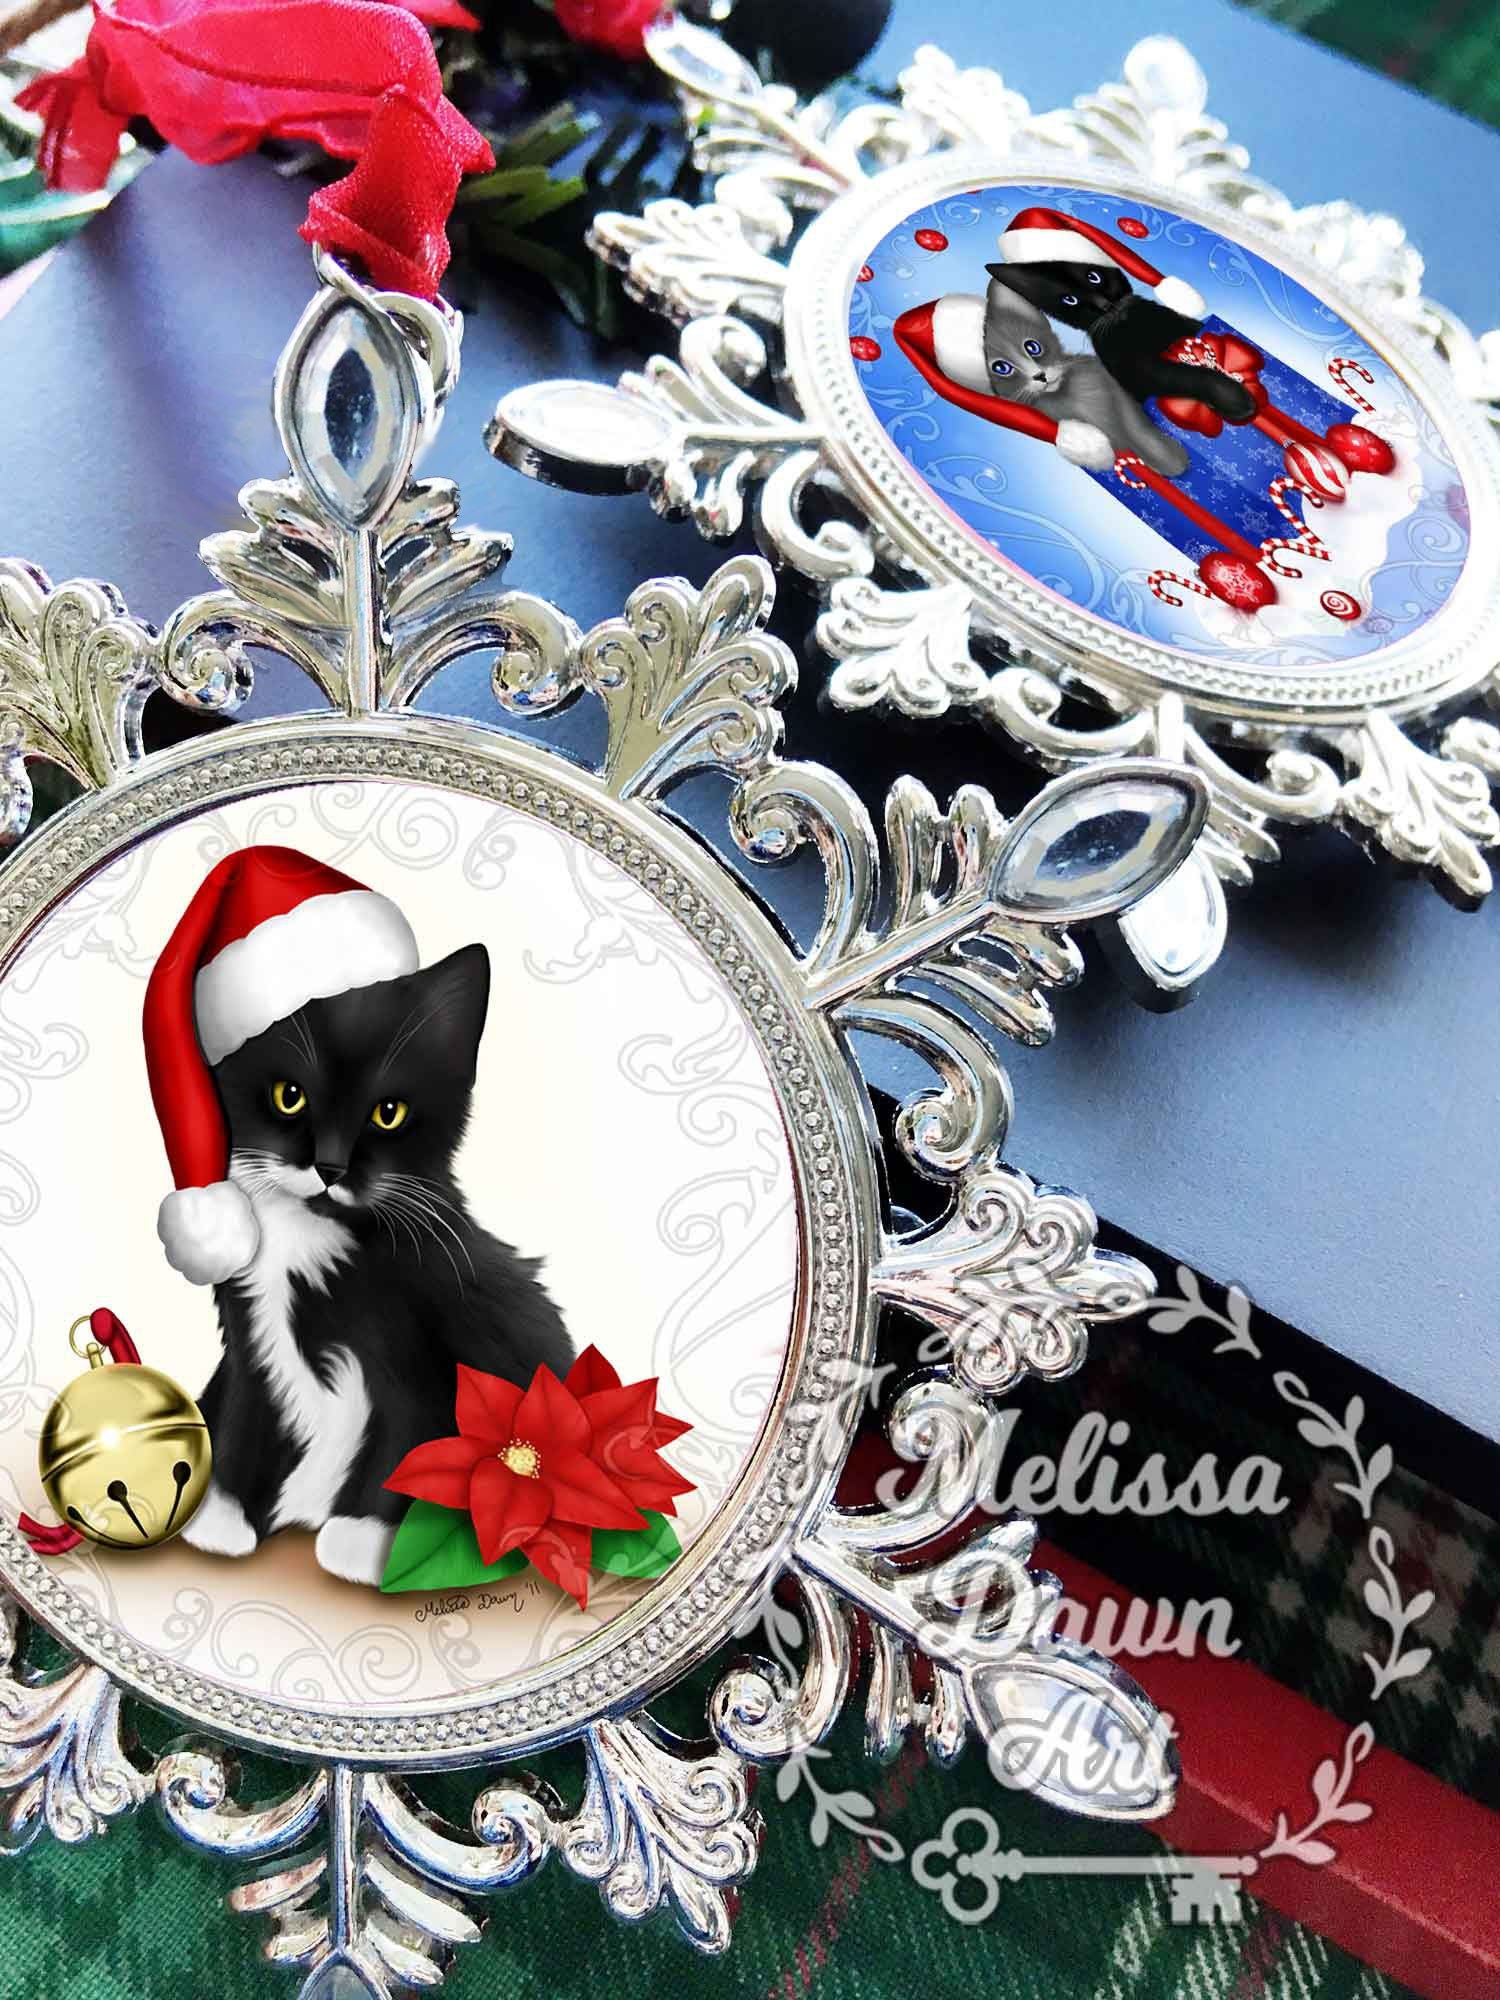 Tuxedo Cat Ornament / Personalized Cat Ornament / Cat Ornament / Tuxedo Memorial / Santa Cat Ornament / Cat in Santa Hat / Tuxedo Ornament